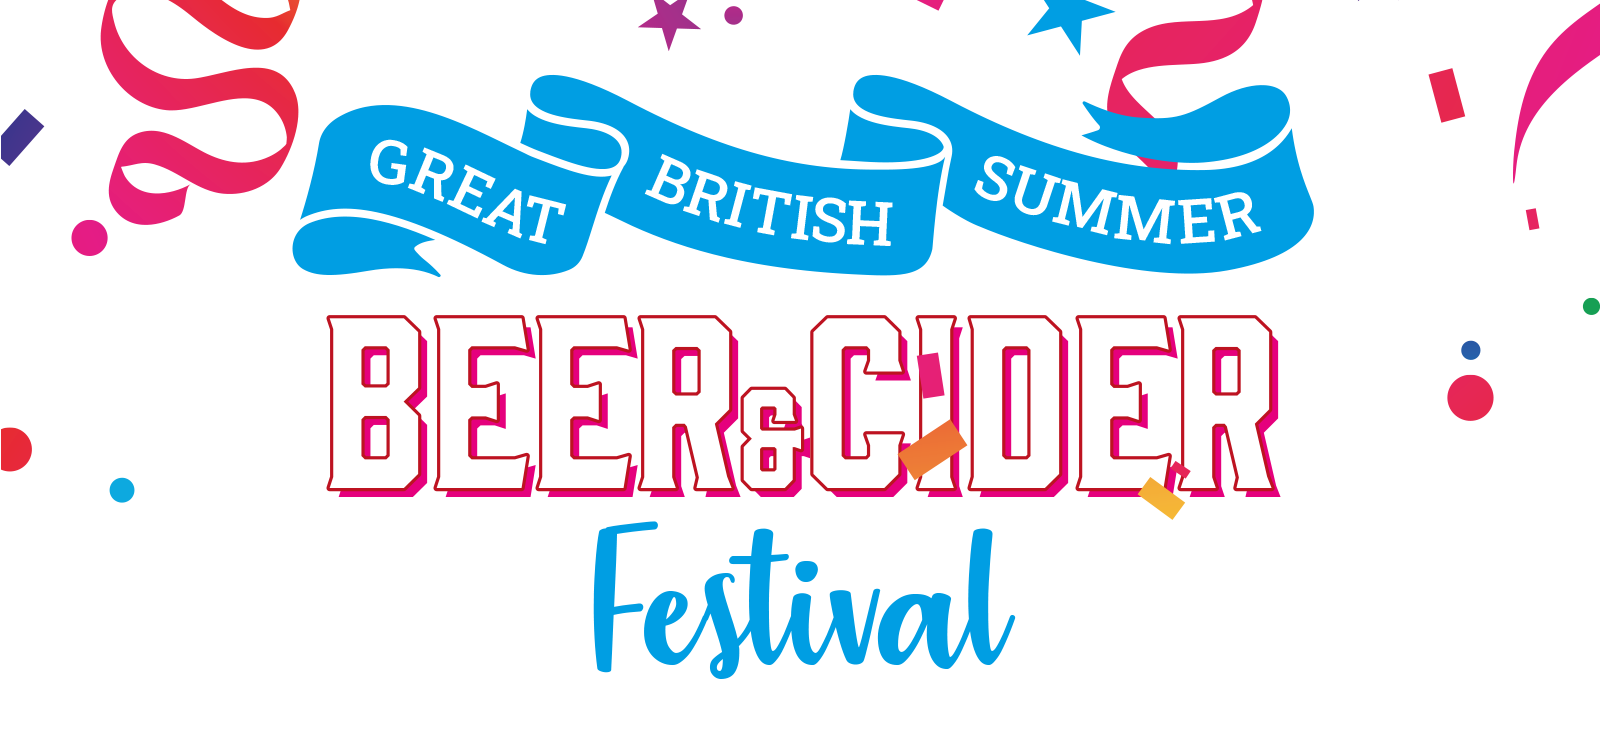 Great British Summer: Beer & Cider Festival